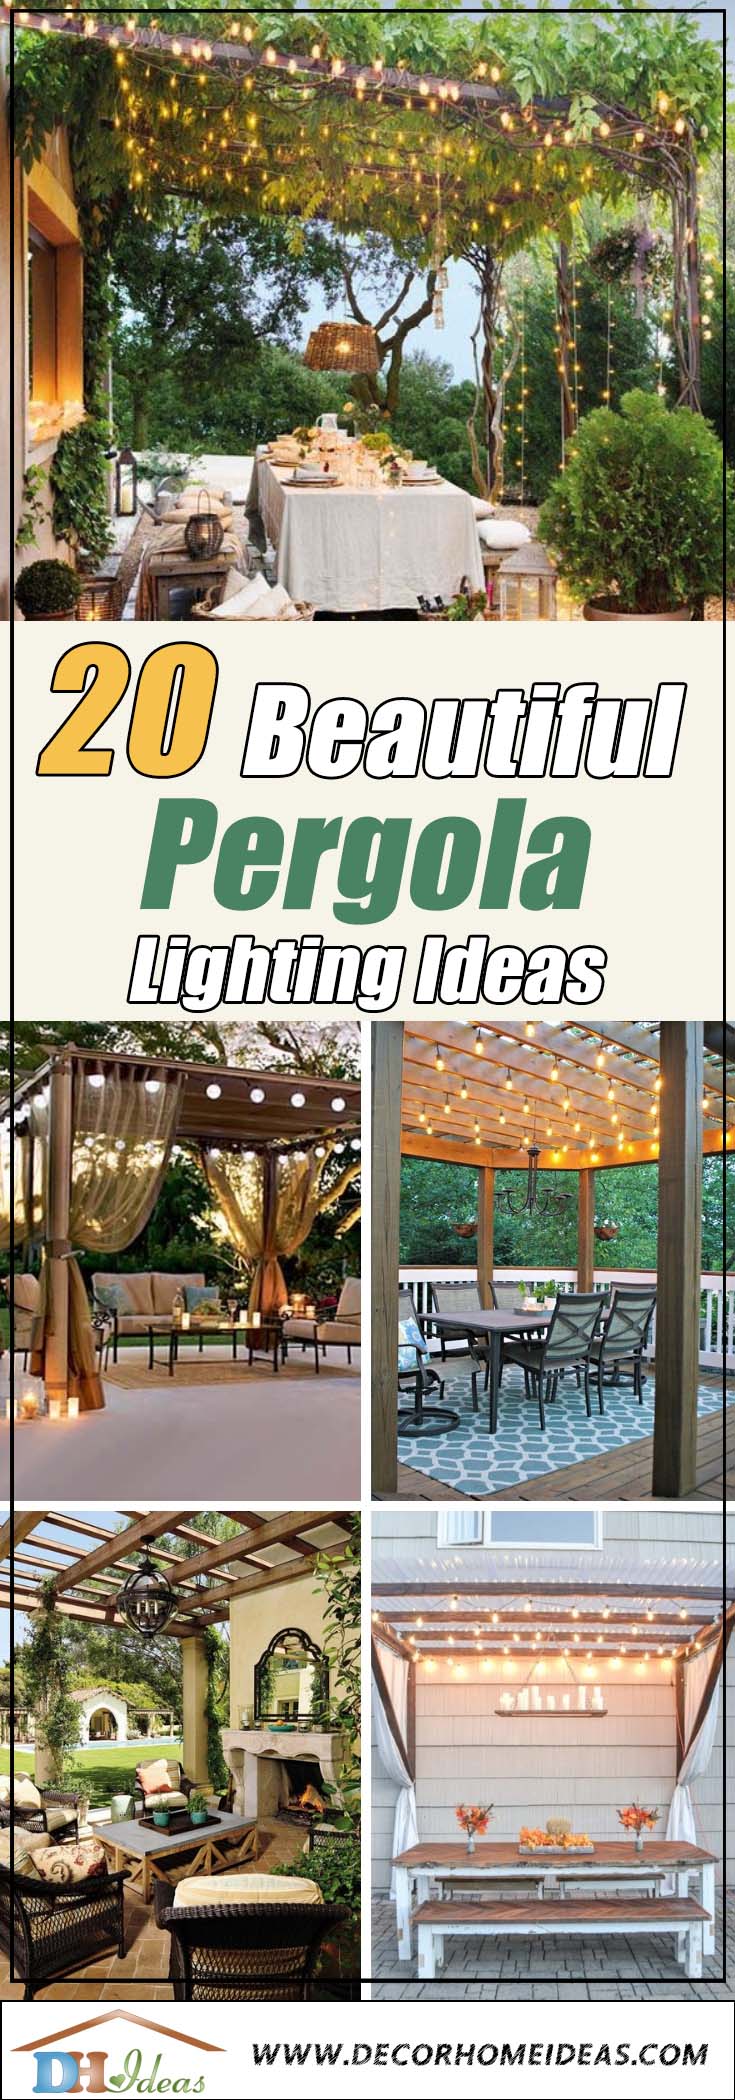 Best Pergola Lighting Ideas #pergola #lighting #lights #decorhomeideas